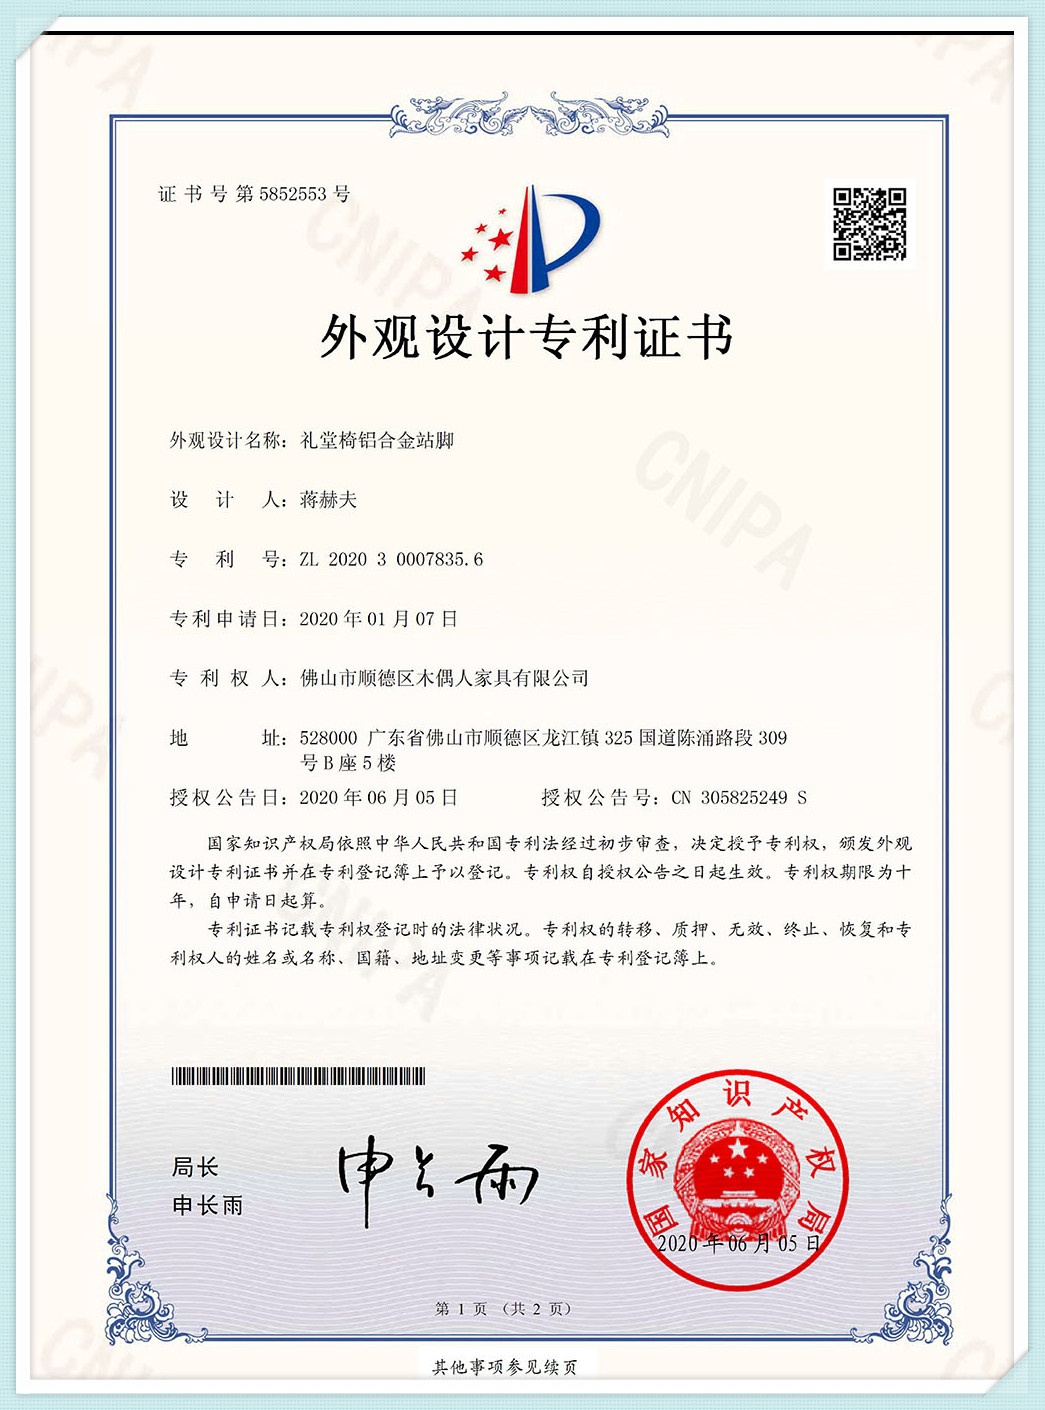 Certificat de patent de disseny